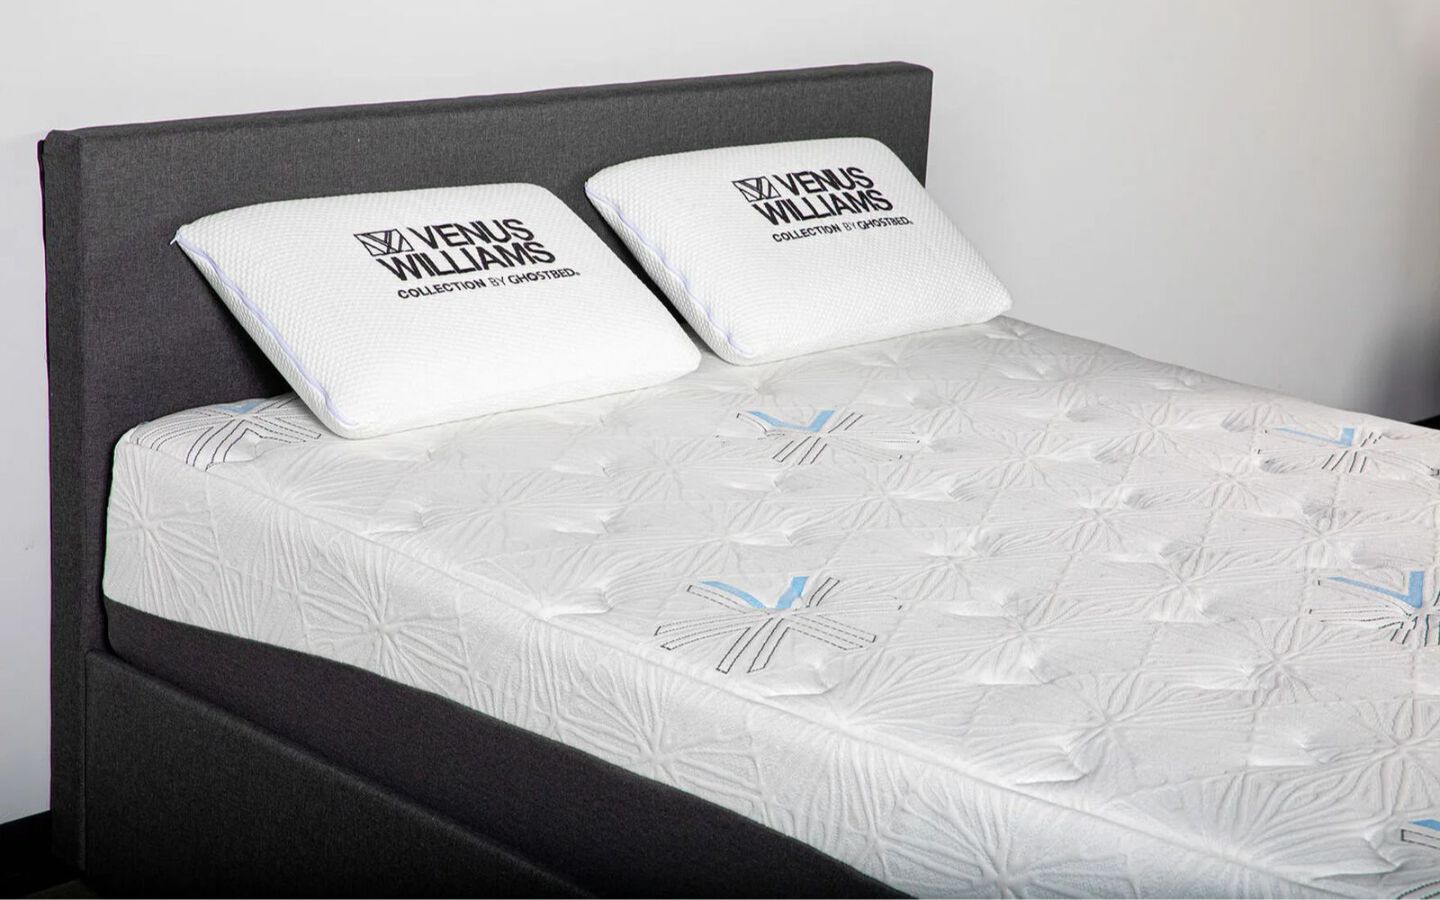 Plain Venus Williams mattress with matching pillows